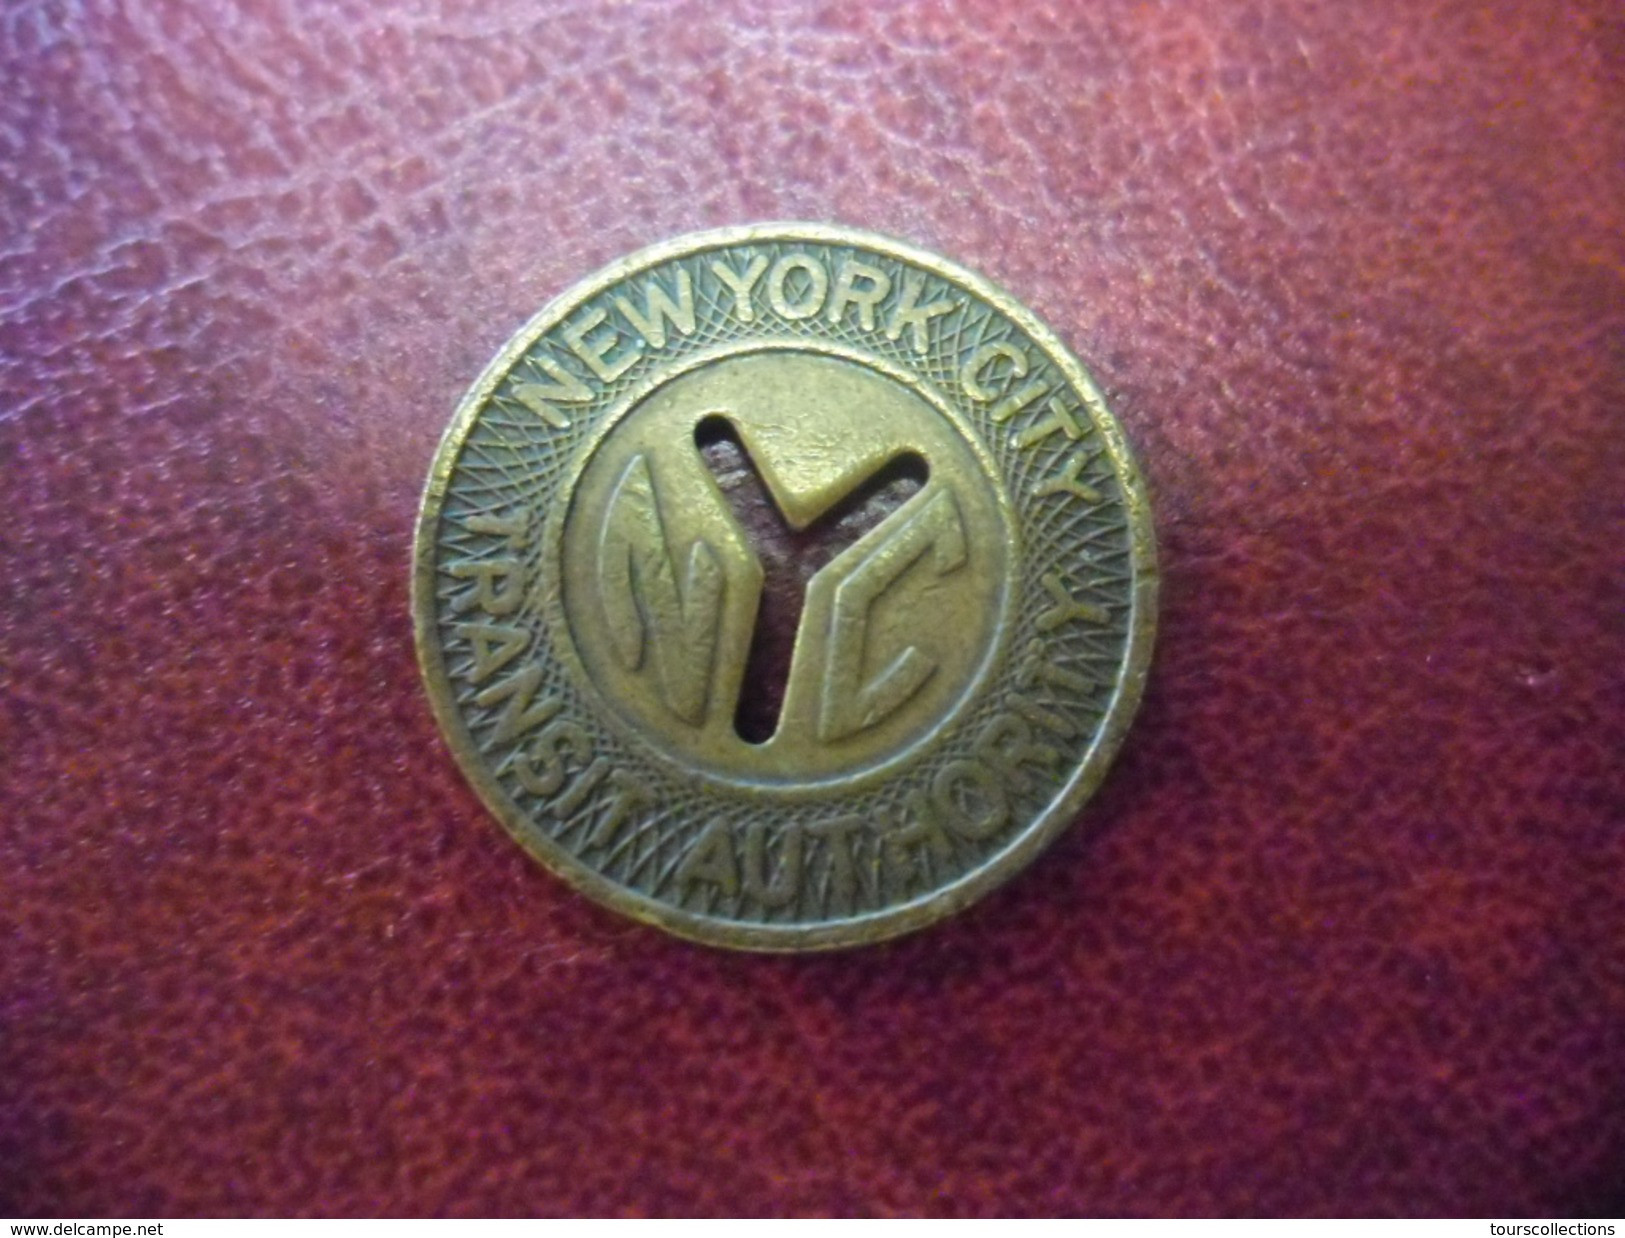 JETON New York City, New York Transit Authority One Fare Transit Token - Subway Métro Vers 1953 à 1970 - Monedas/ De Necesidad